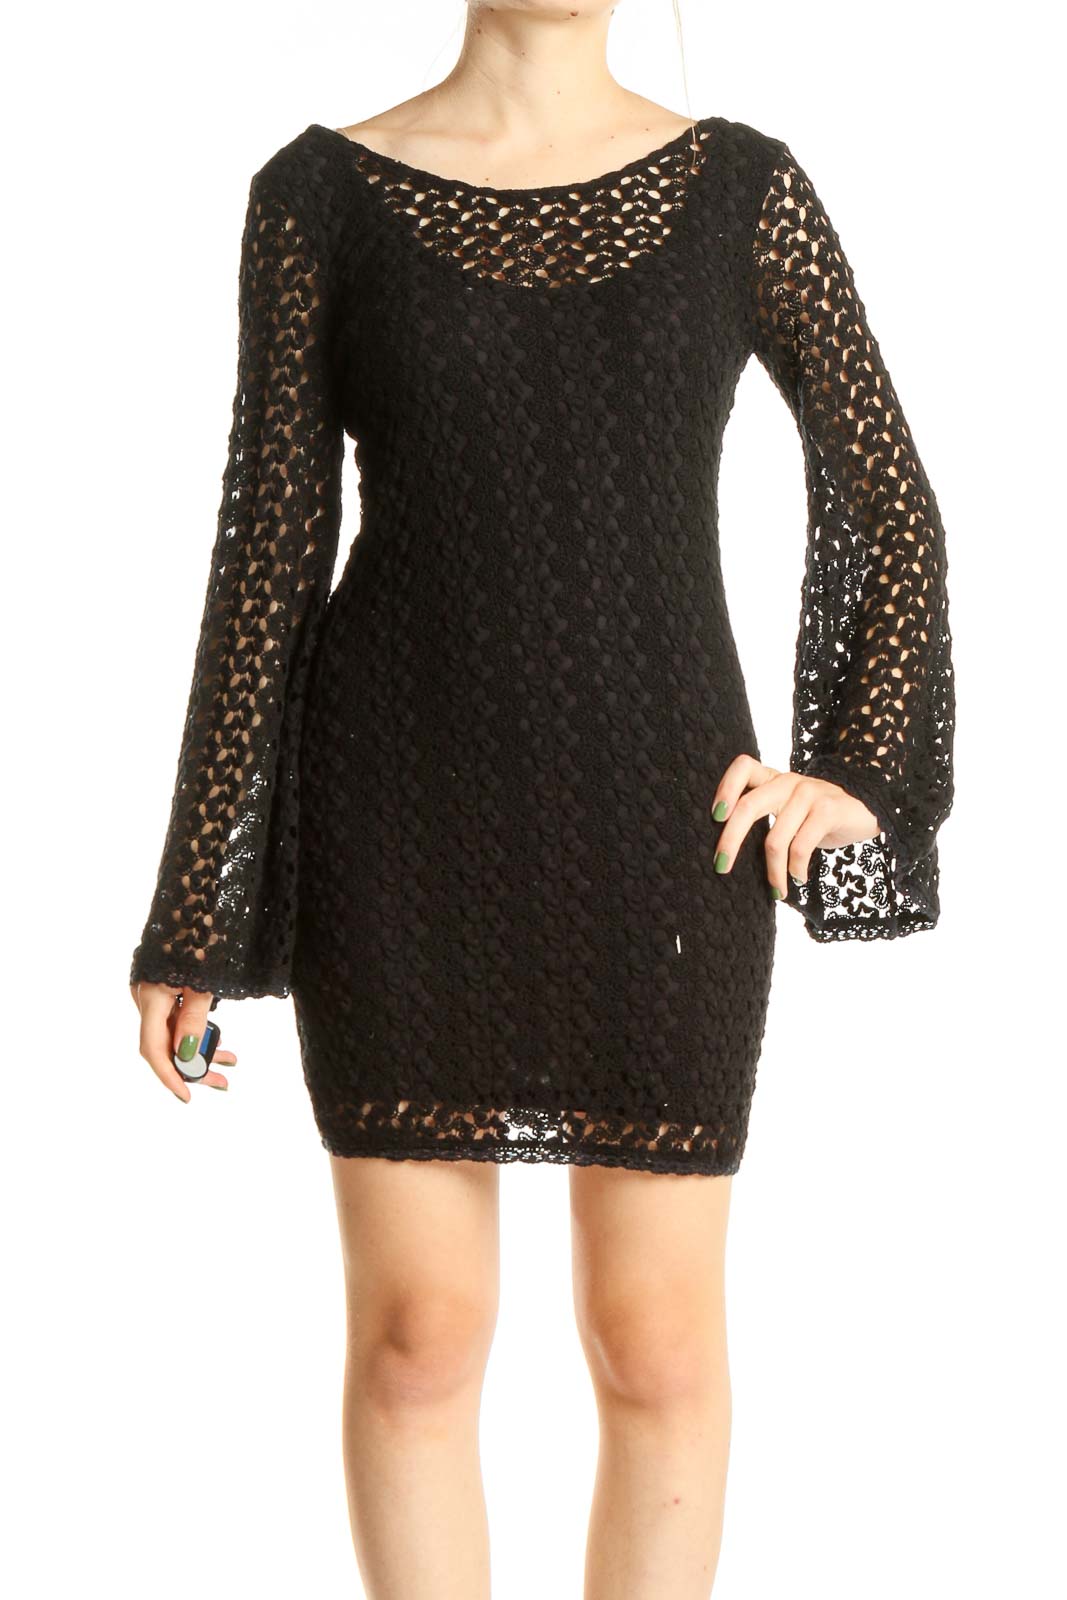 Black Crochet Cocktail Mini Dress Front